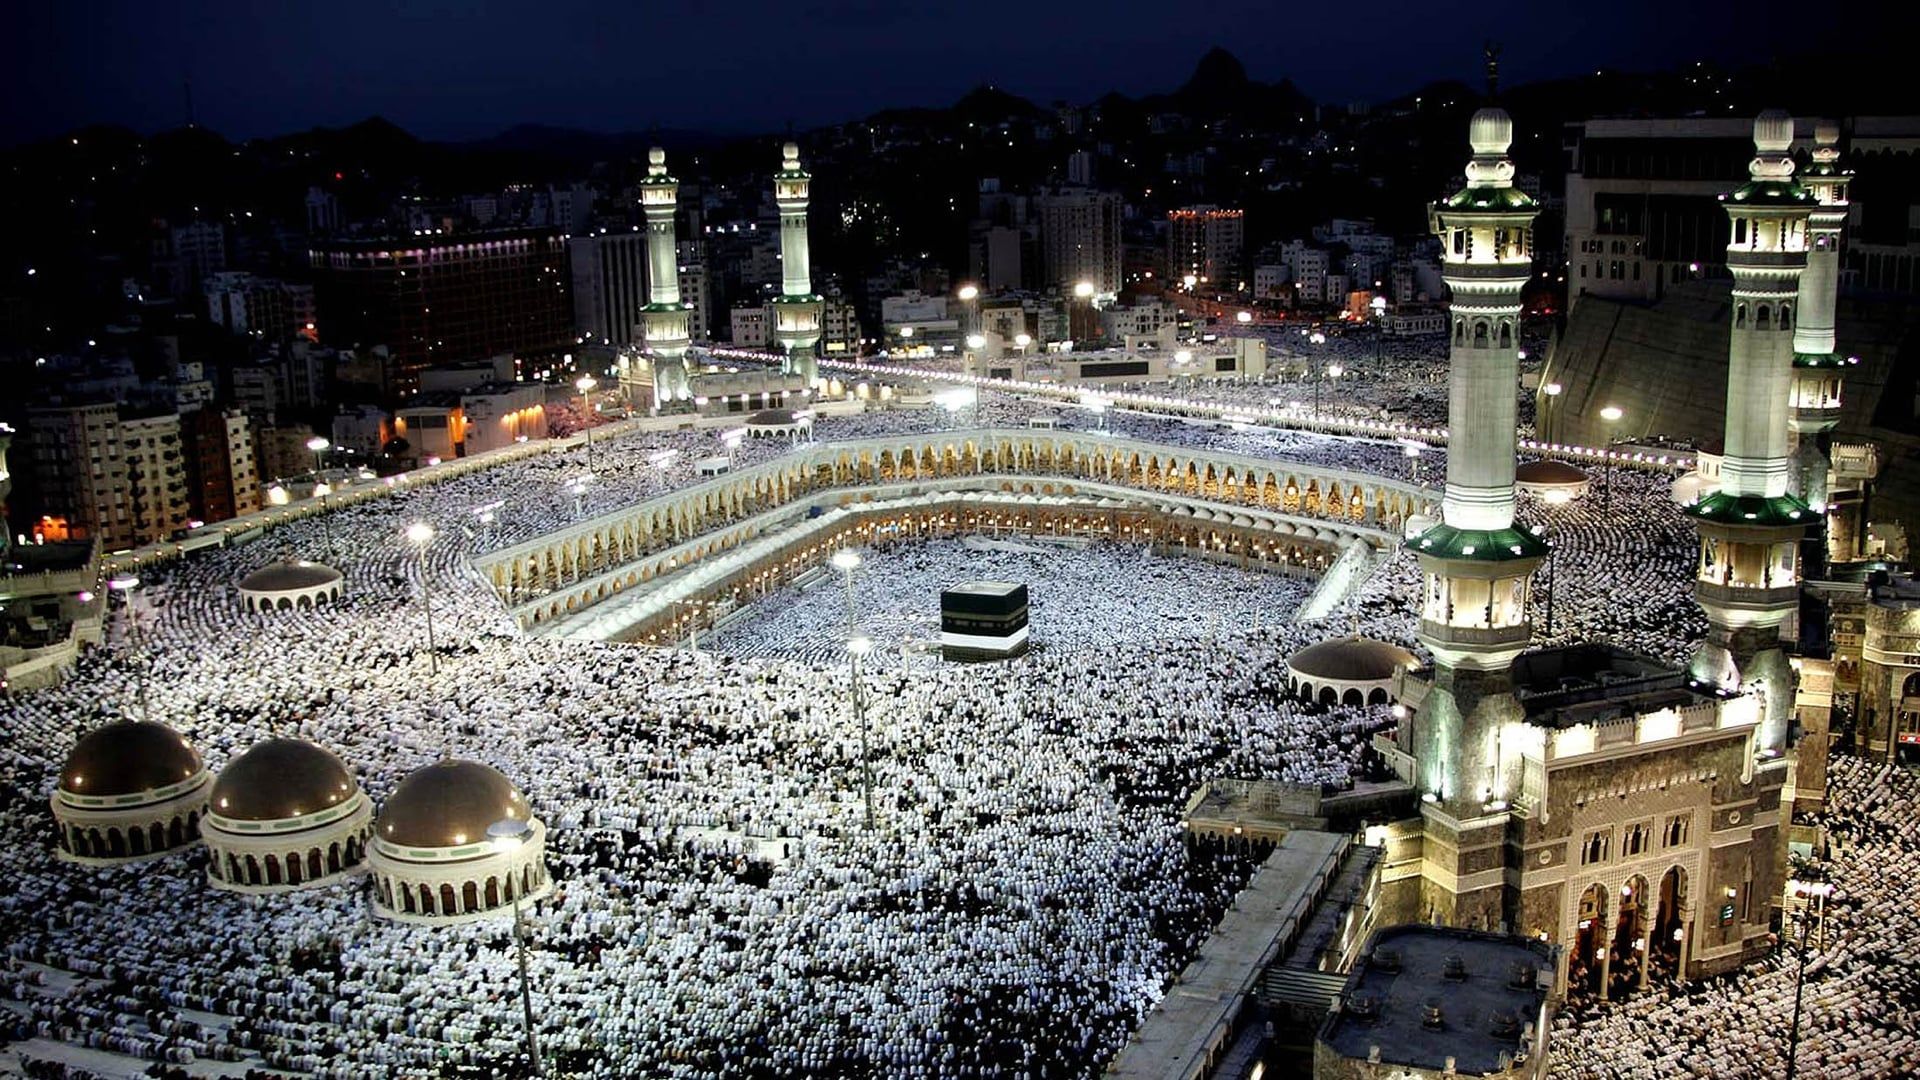 Inside Mecca background